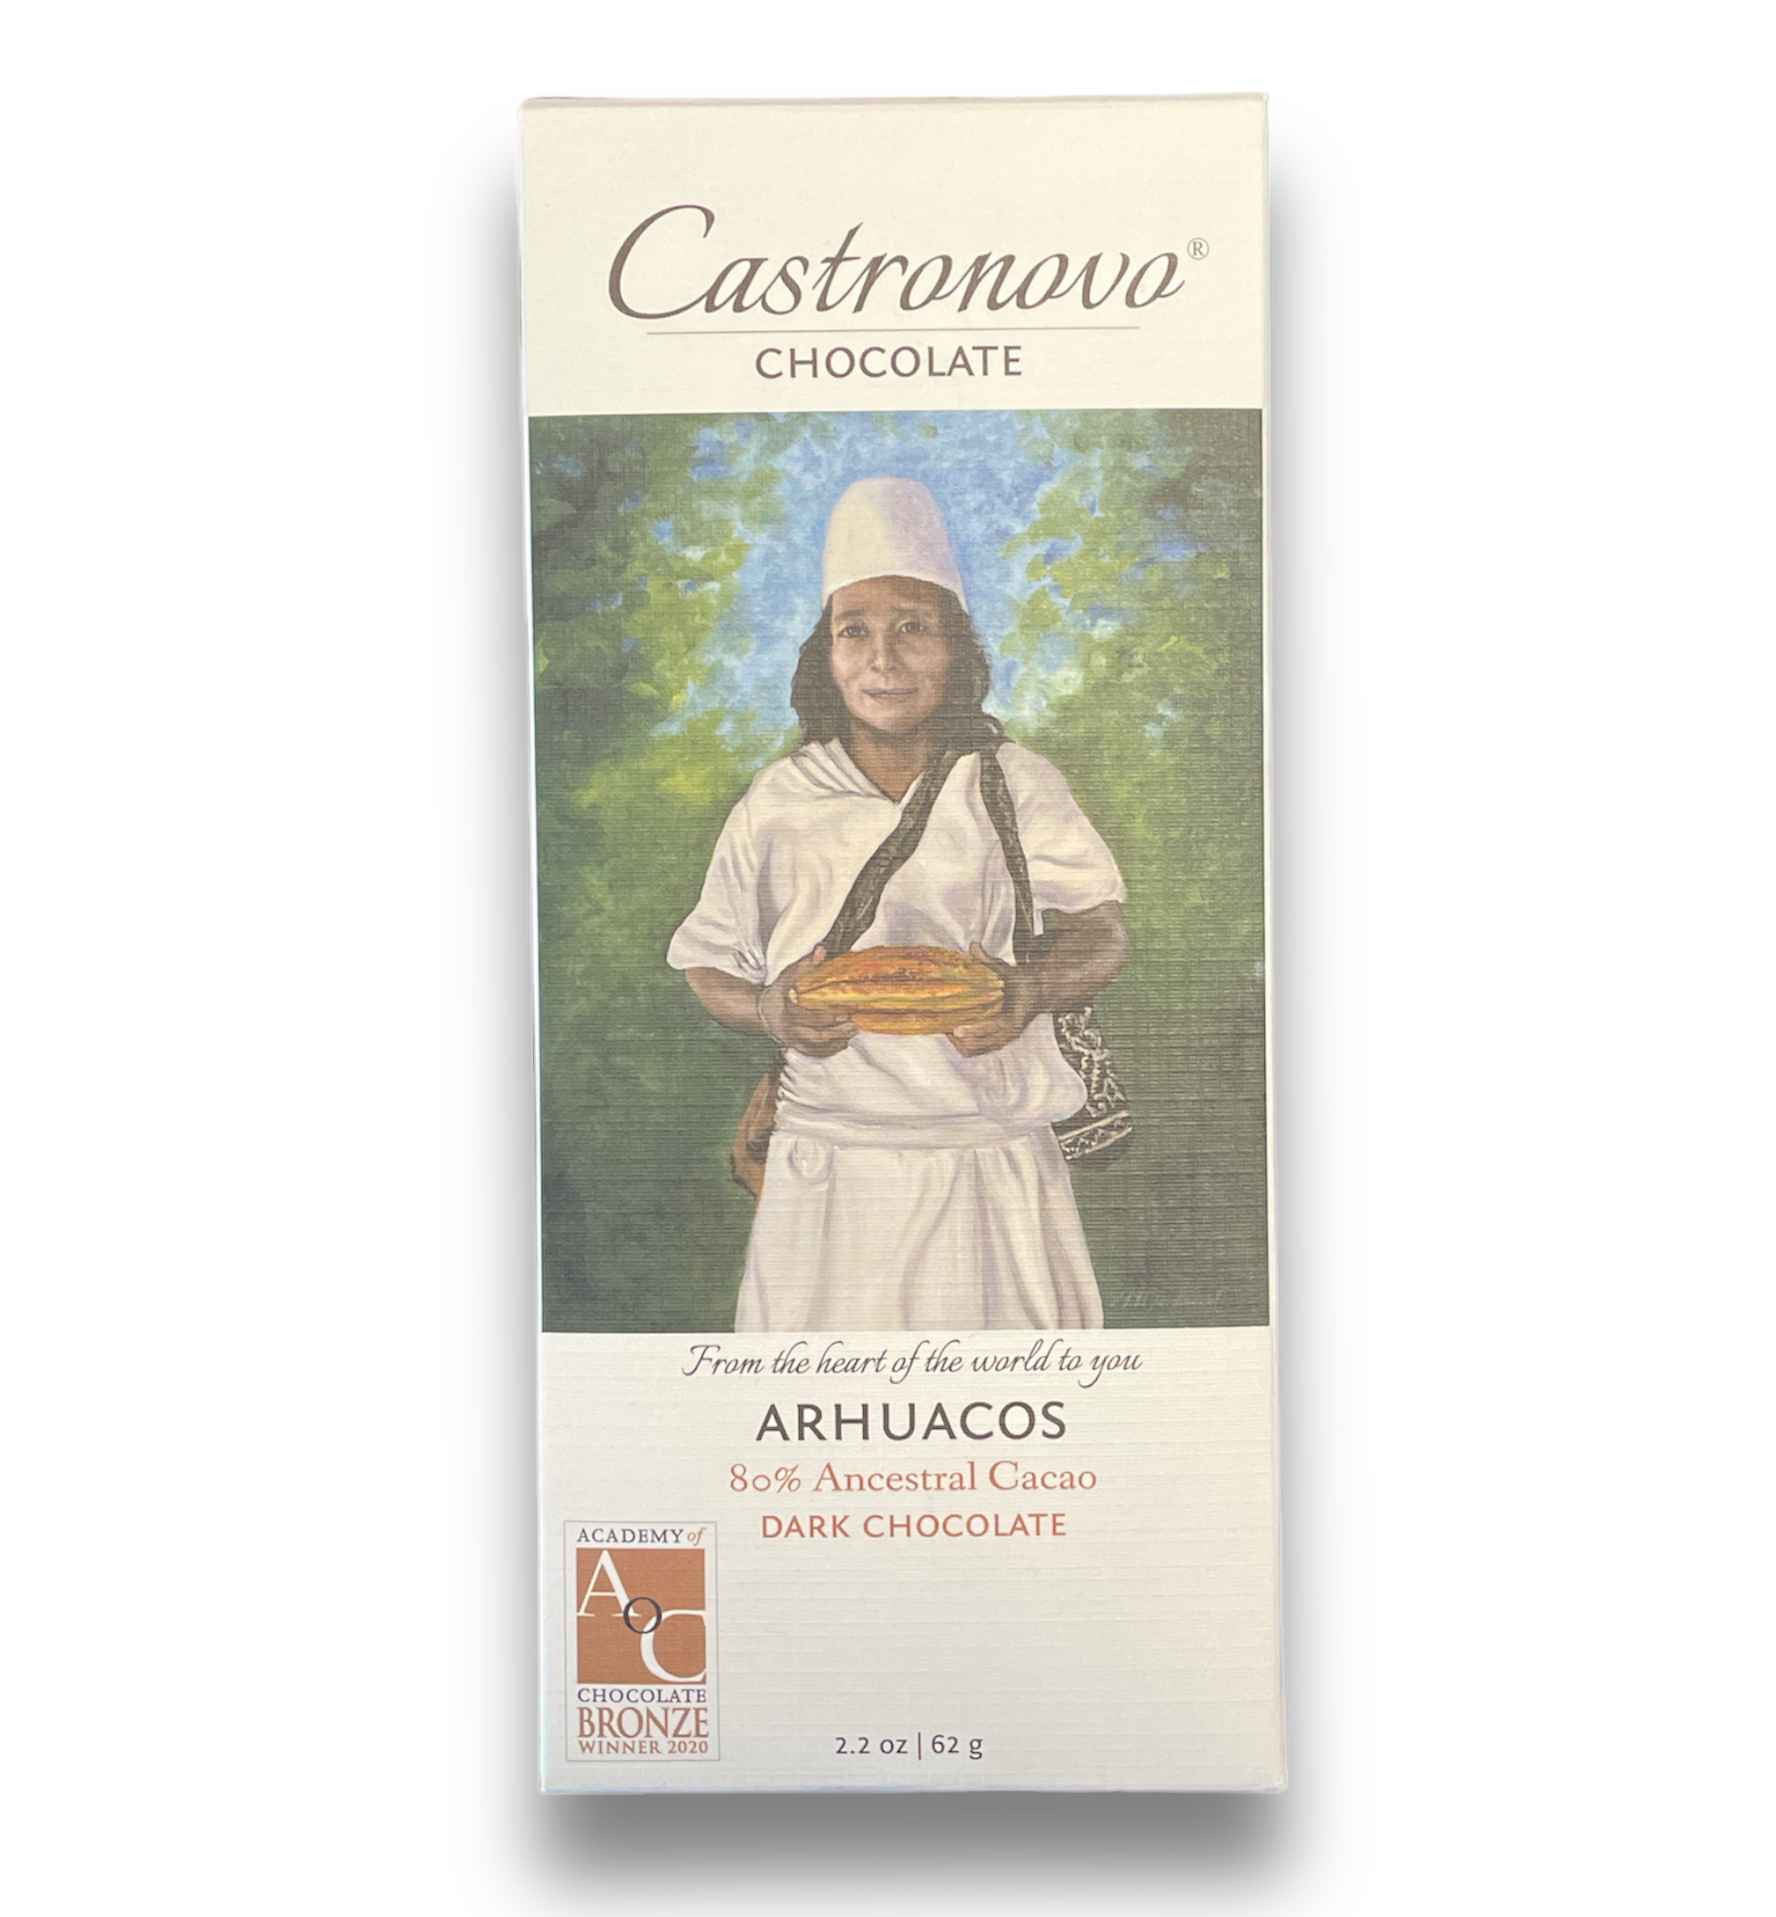 Castronovo Dark Chocolate - Arhuacos 80% Ancestral Cacao